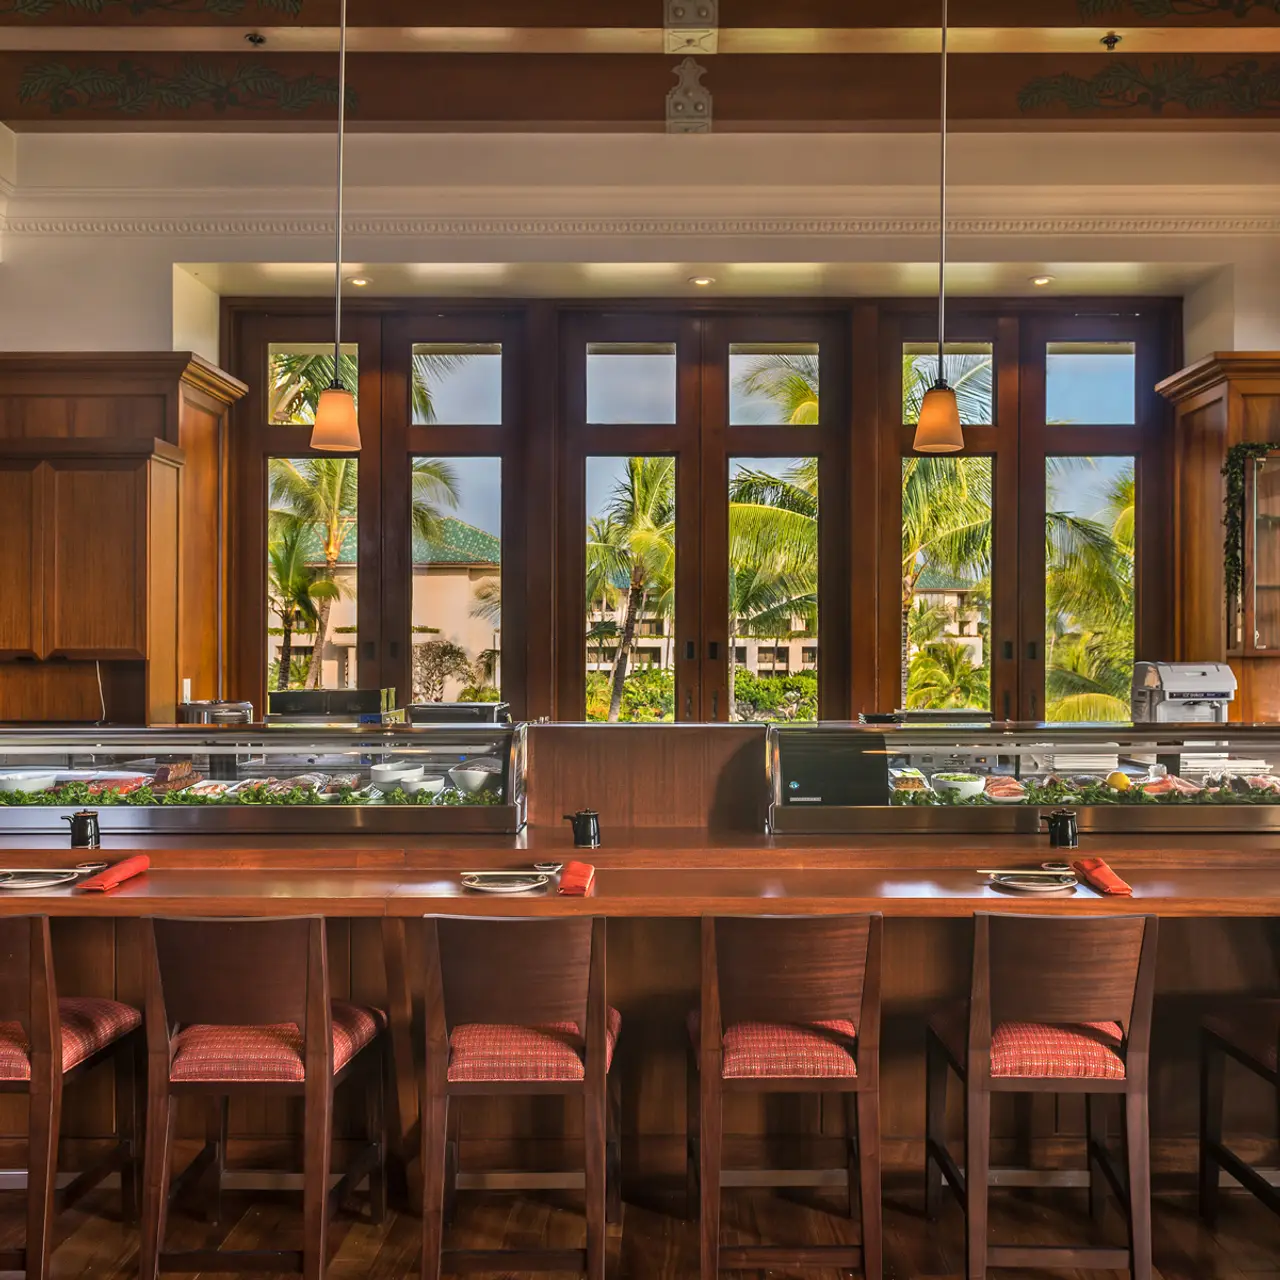 Stevenson's Sushi & Spirits is a Restaurant located in the city of Poipu on Kauai, Hawaii